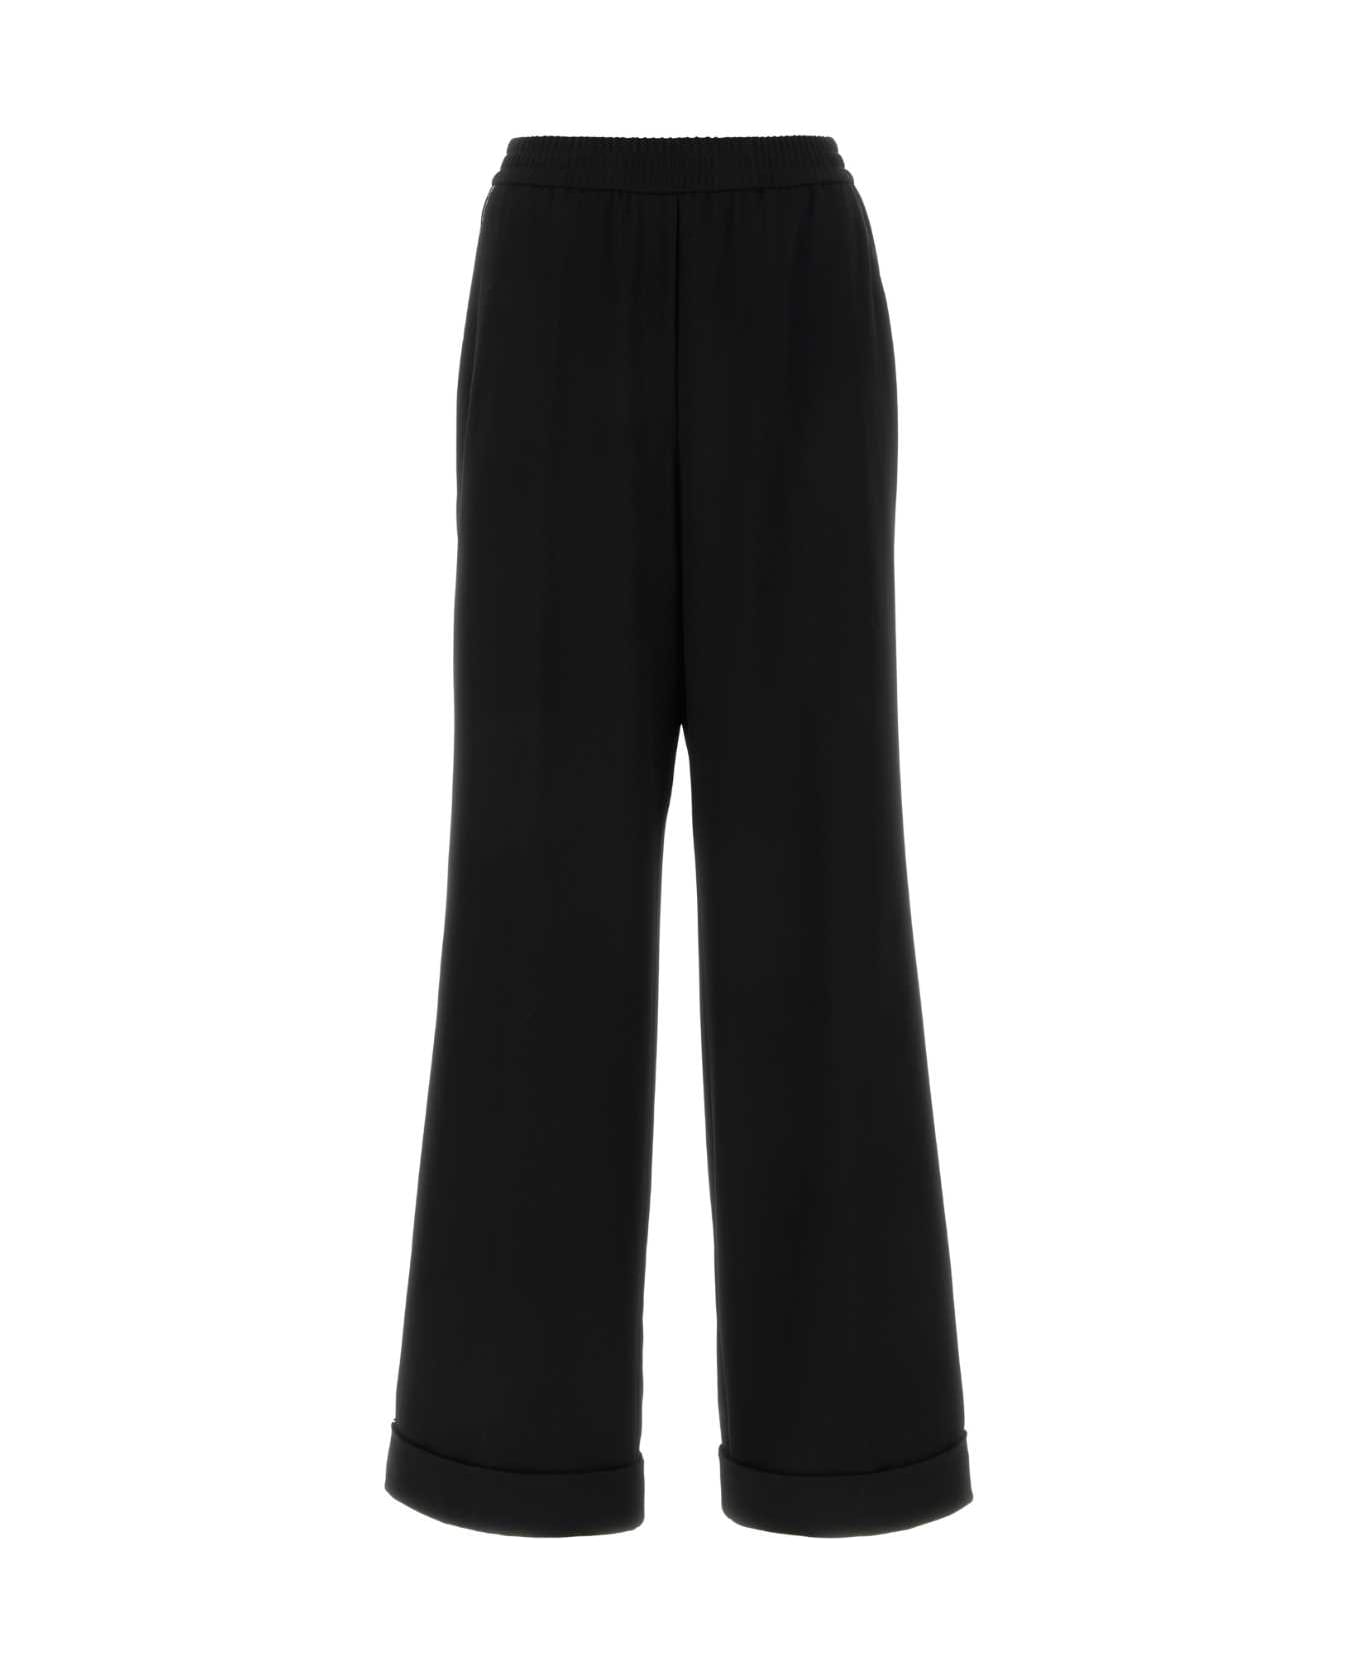 Dolce & Gabbana Black Stretch Wool Pajamas Pant - NERO